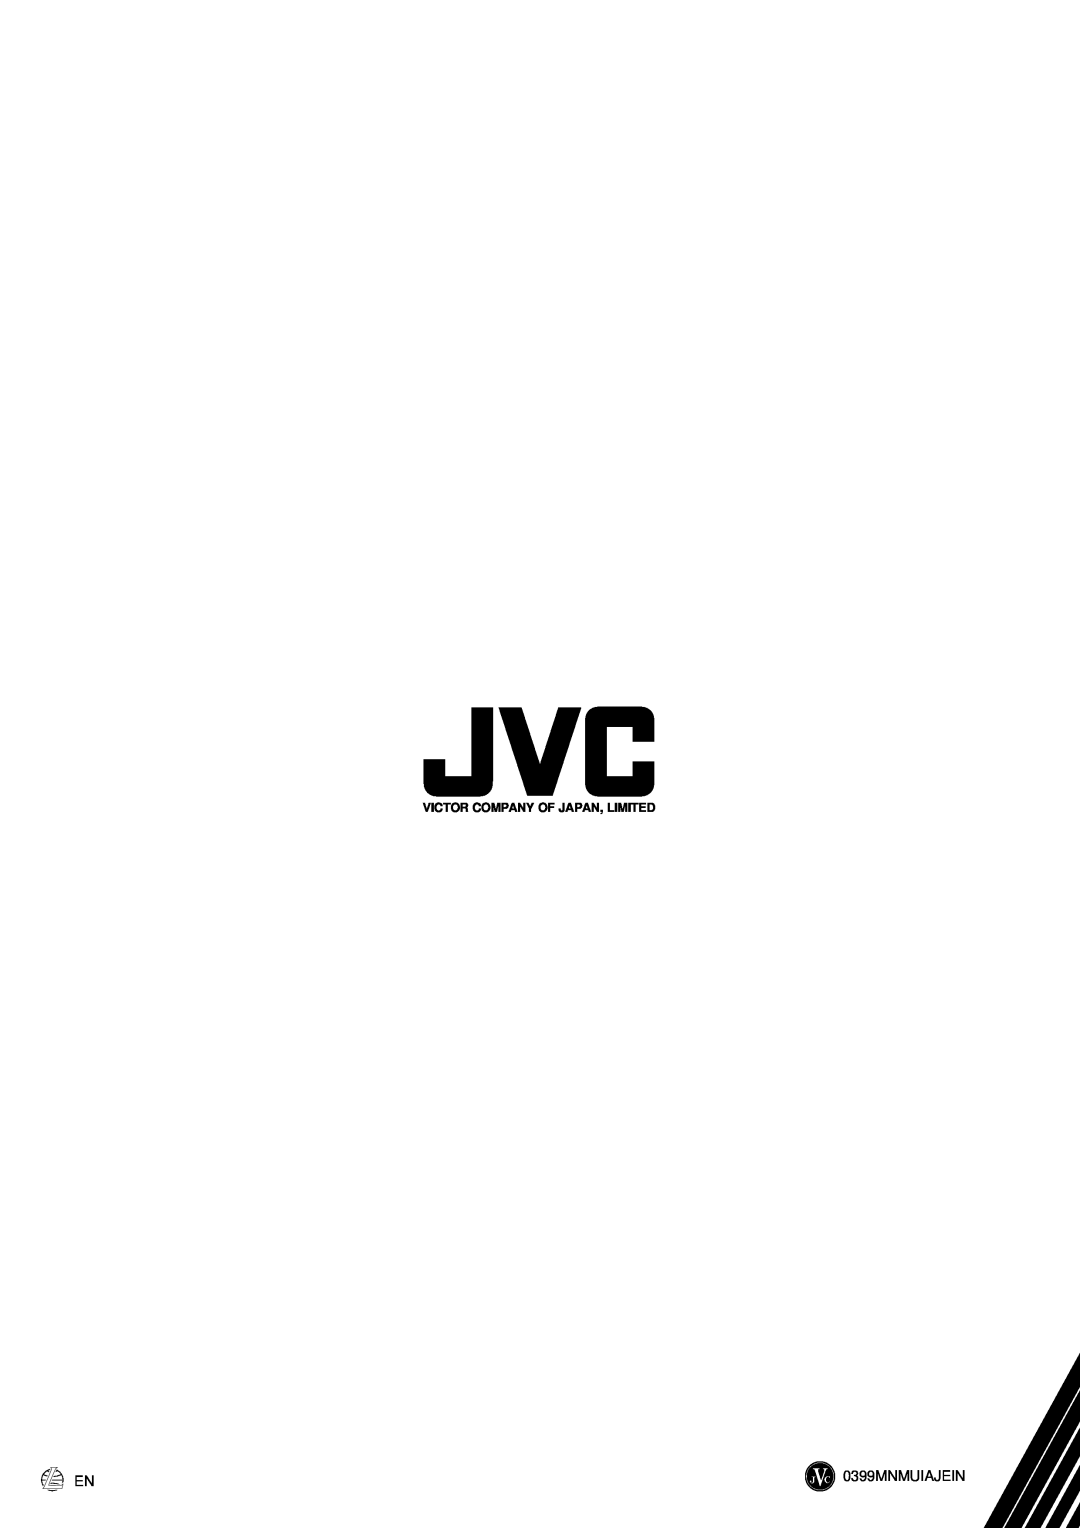 JVC RV-B55 LTD, RV-B55 BU, RV-B55 GY manual 0399MNMUIAJEIN, Victor Company Of Japan, Limited 